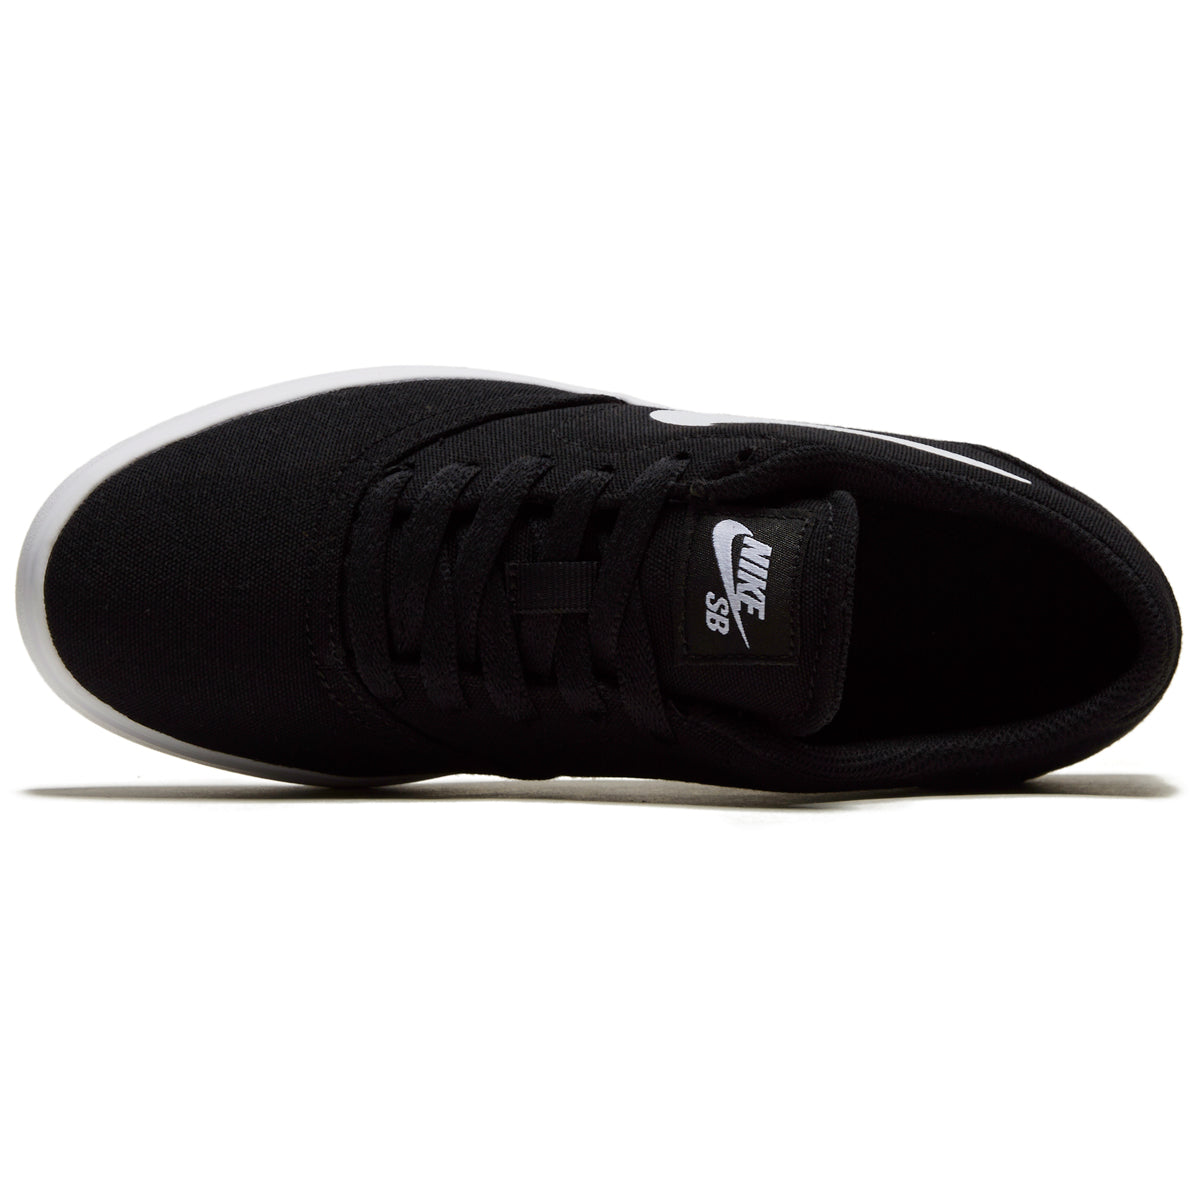 Nike SB Youth Check Canvas Shoes - Black/White image 3